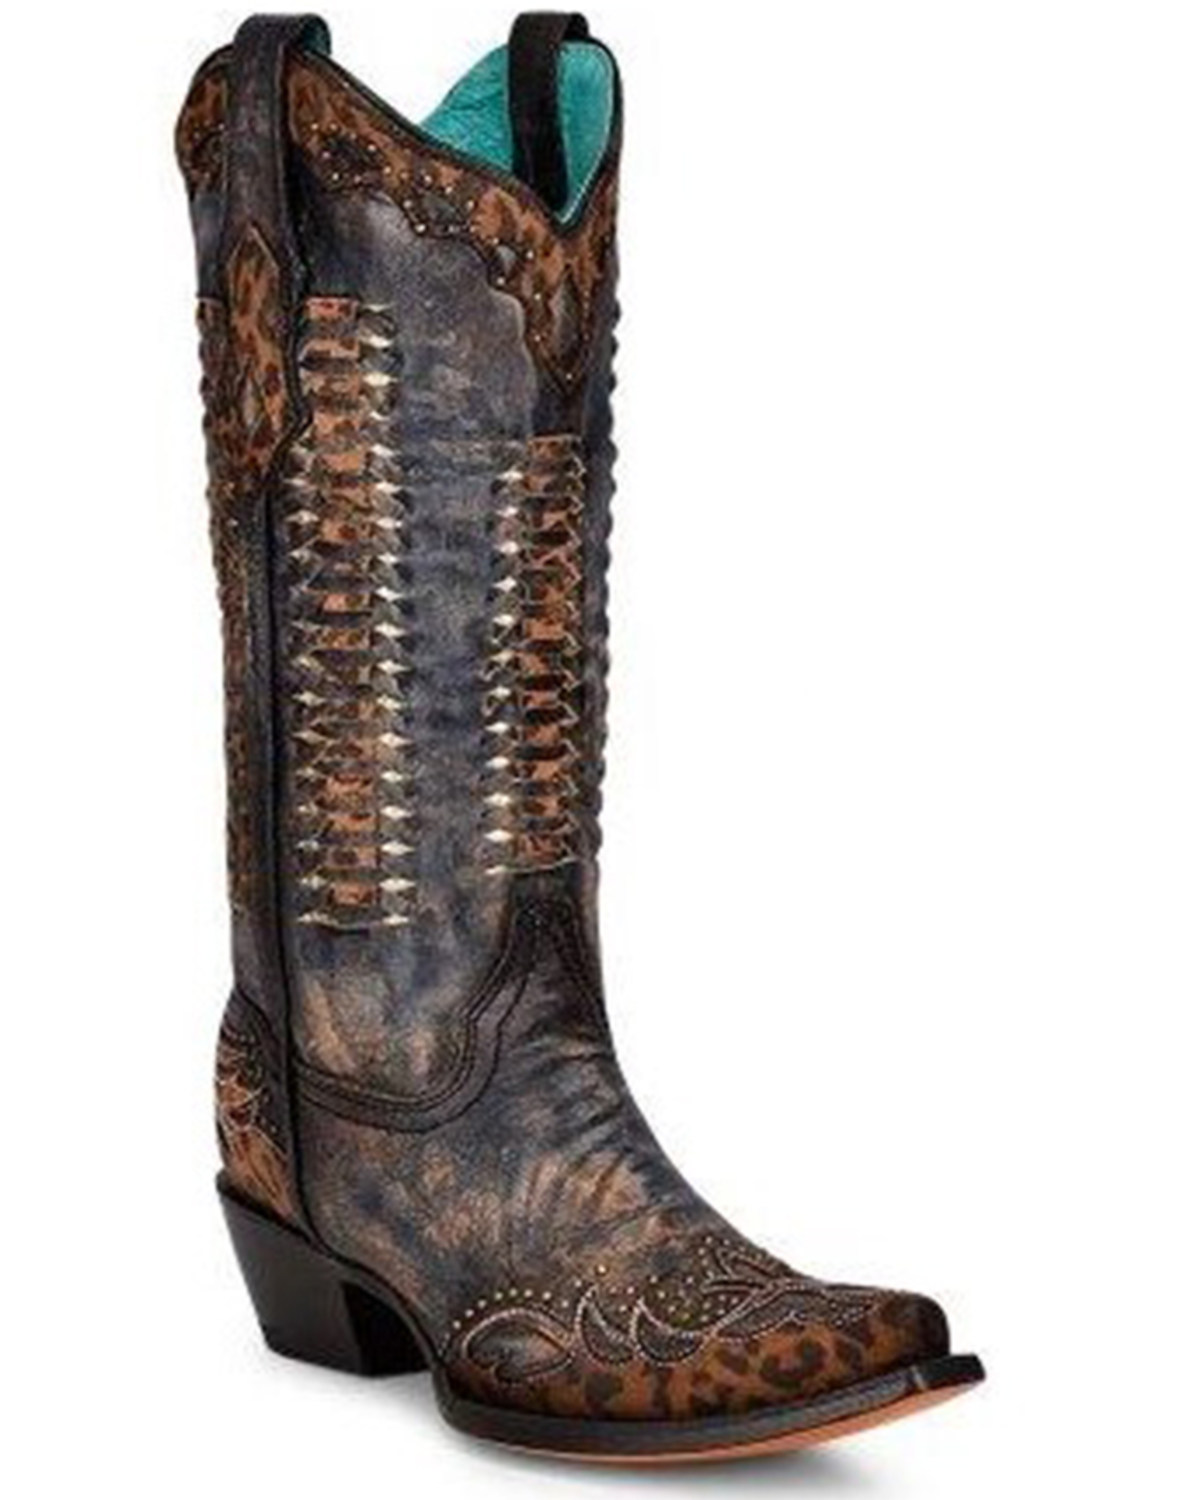 Corral Women's Leopard Print Woven Western Boots - Snip Toe